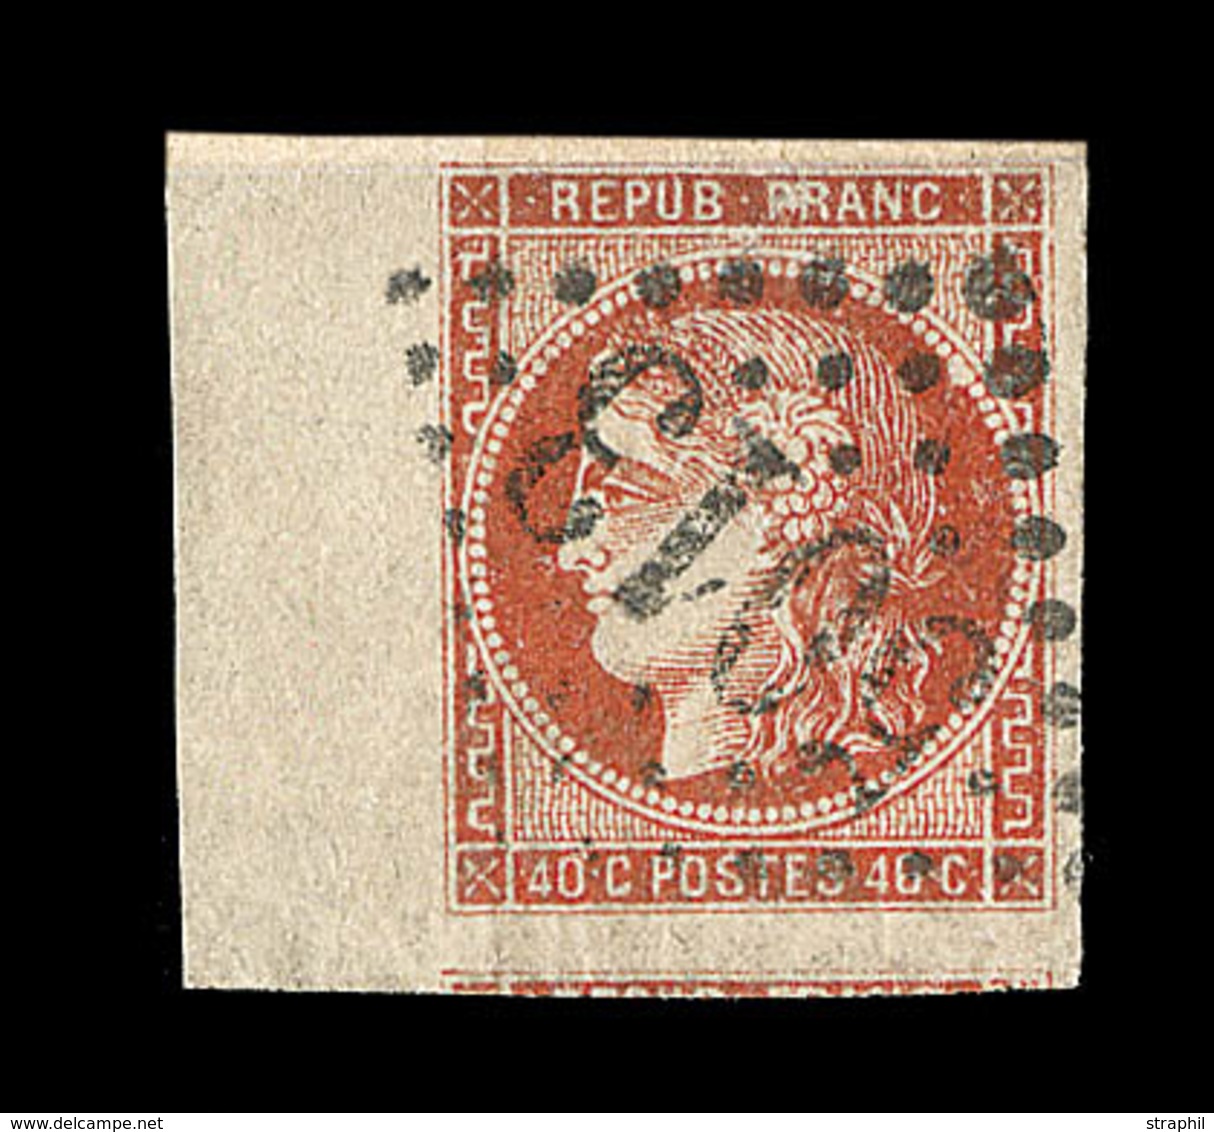 O N°48d - 40c Rouge Sang Clair - Voisin + Grd BDF - Obl. GC 5013 (Blidah) - 1 Point Clair - Sinon Luxe - 1870 Uitgave Van Bordeaux